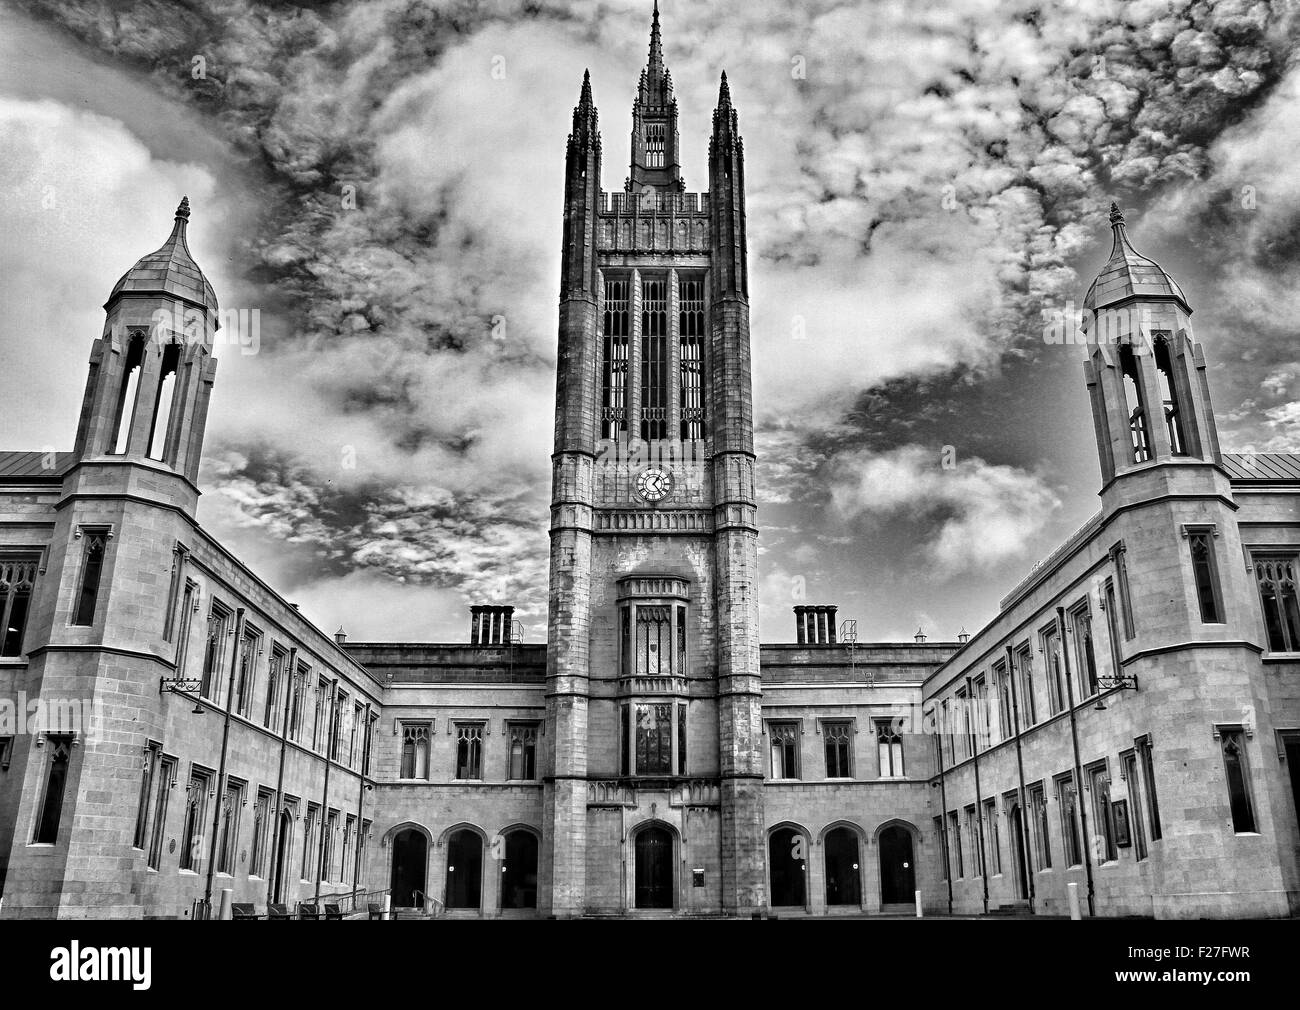 marischal college Aberdeen Scotland council dark moody clouds turrets clock tower courtyard door ways Stock Photo